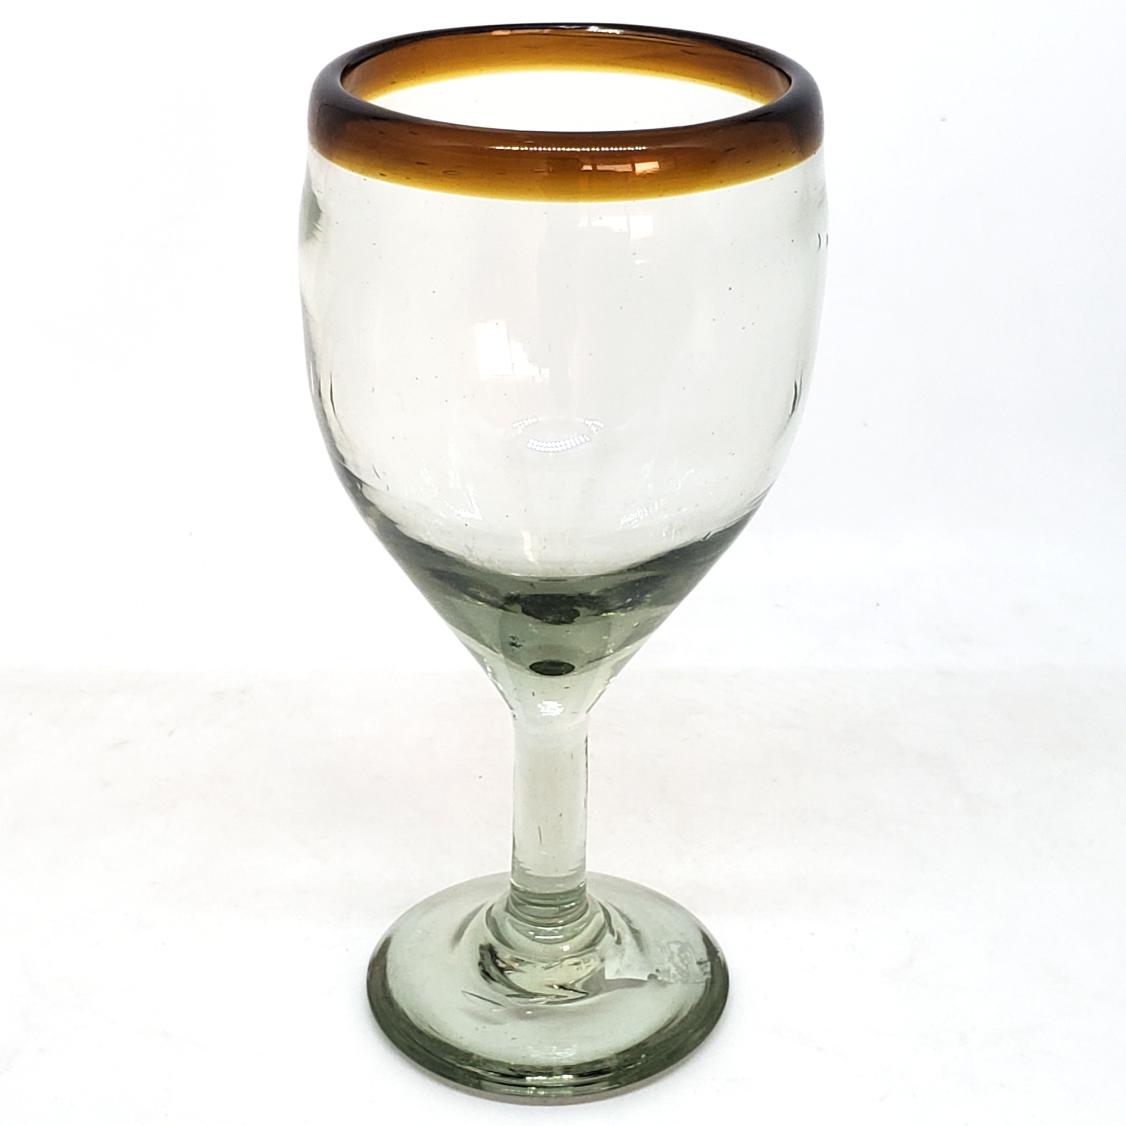 Ofertas / Juego de 6 copas para vino con borde ambar / Capture el aroma de un fino vino tinto con éstas copas decoradas con un borde ambar.